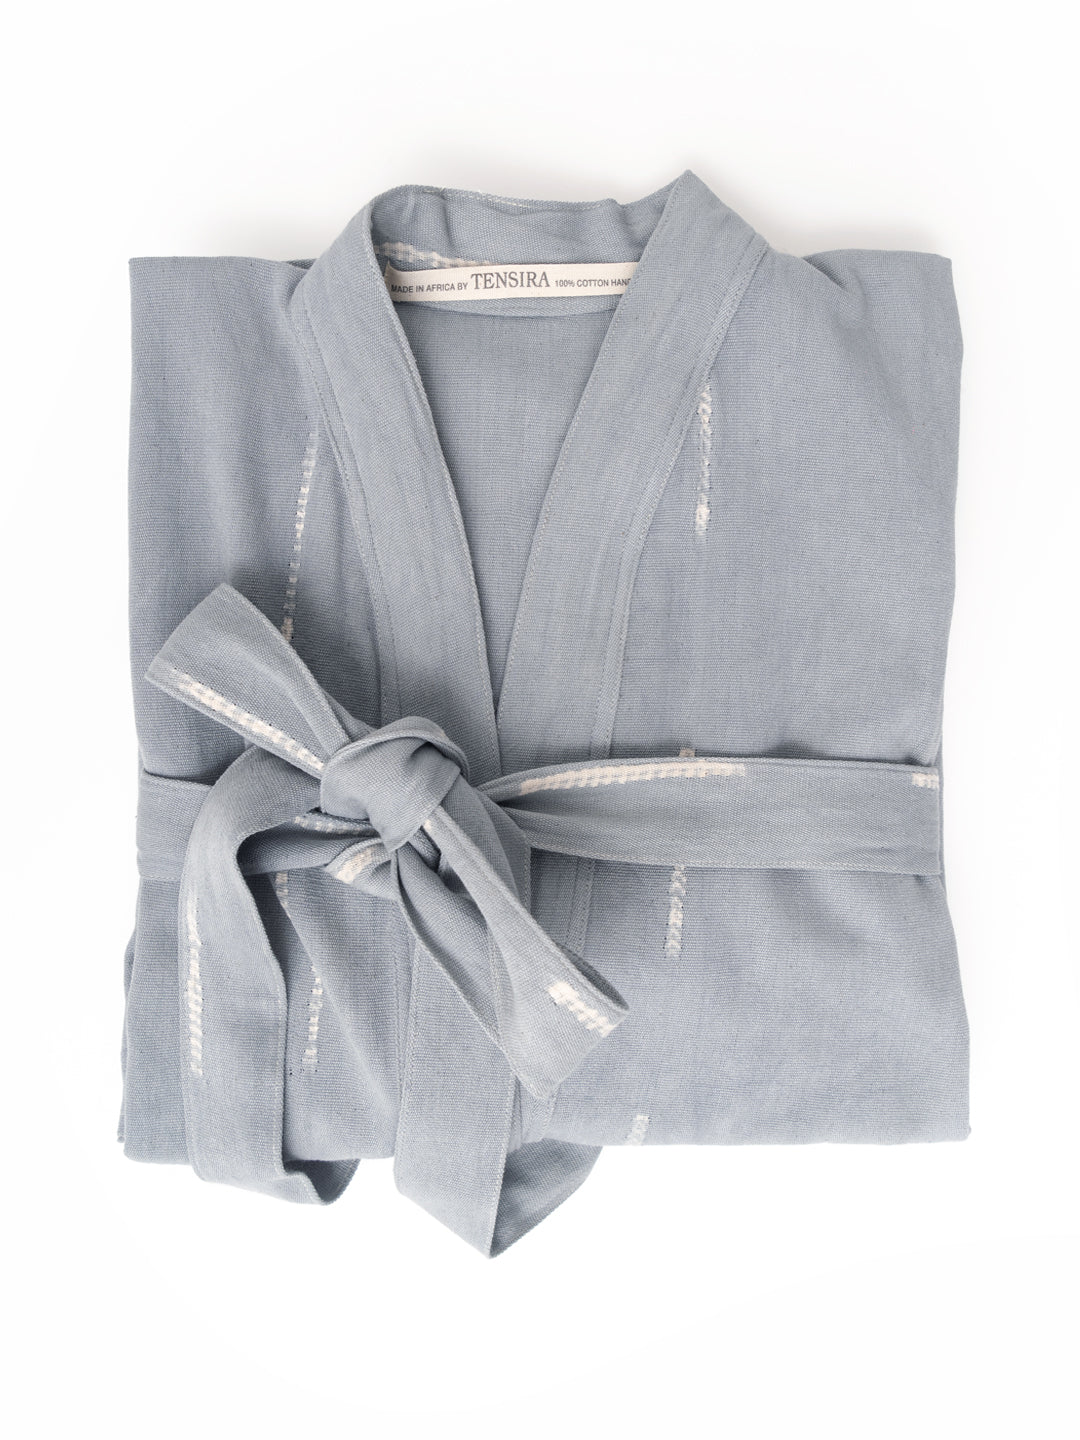 teint Kimono à la coton, main 100% Tensira